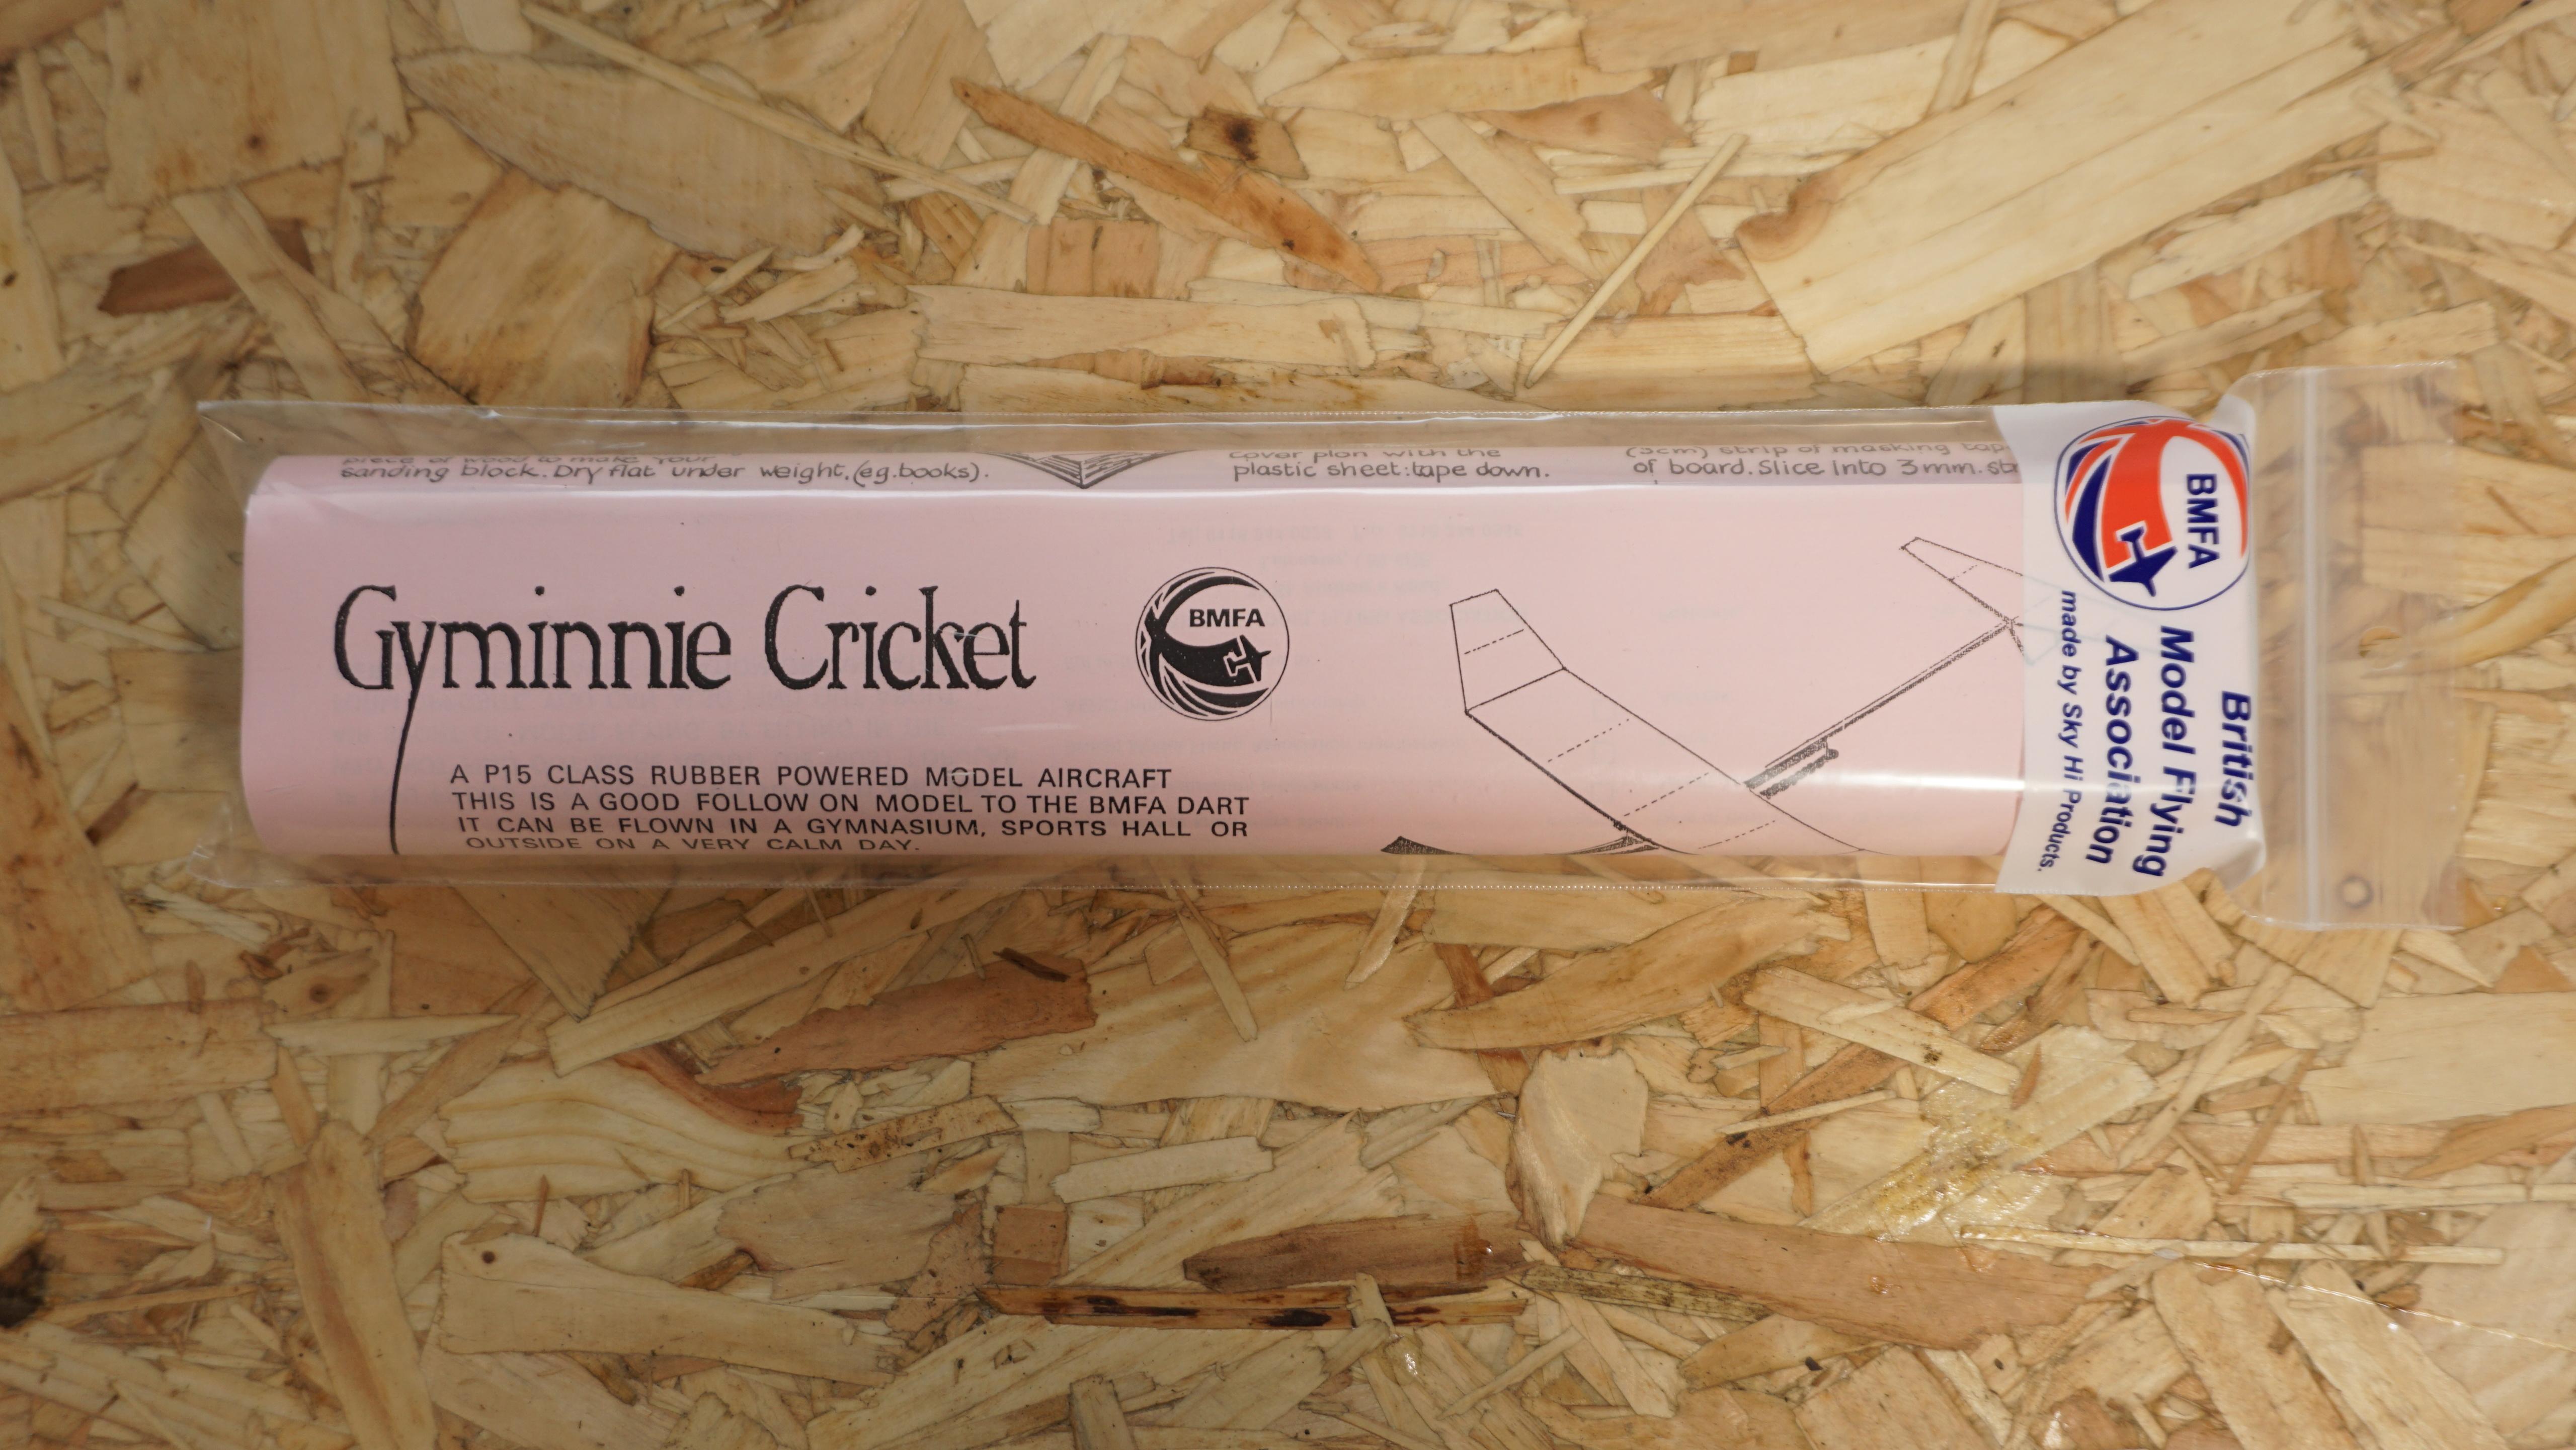 BMFA Giminie Cricket P15 Class Ruibber Powered Model